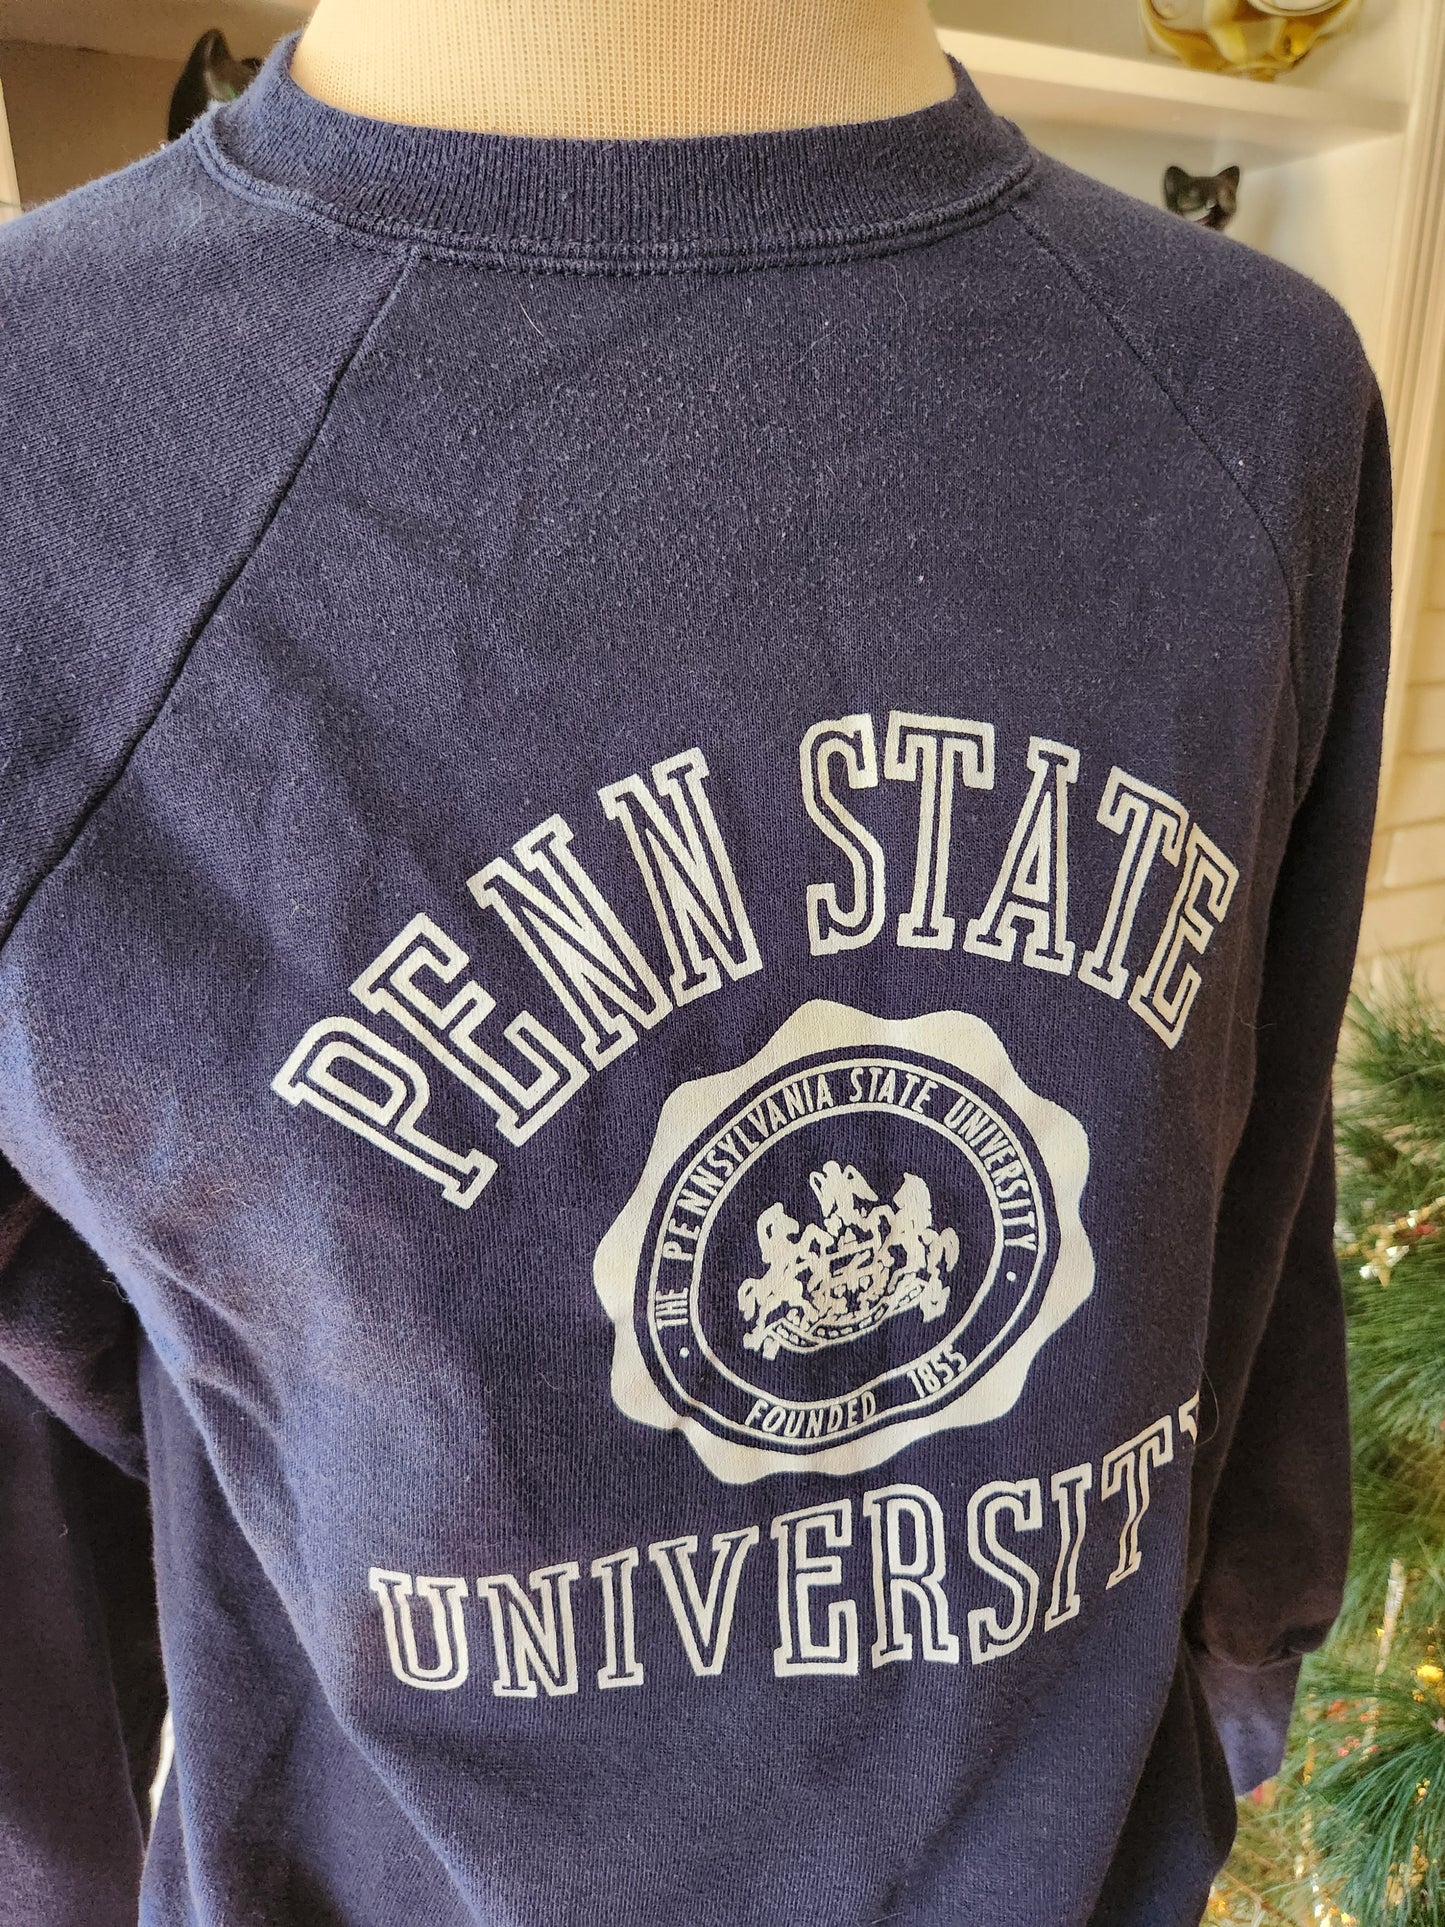 Vintage Penn State Sweatshirt by Signal